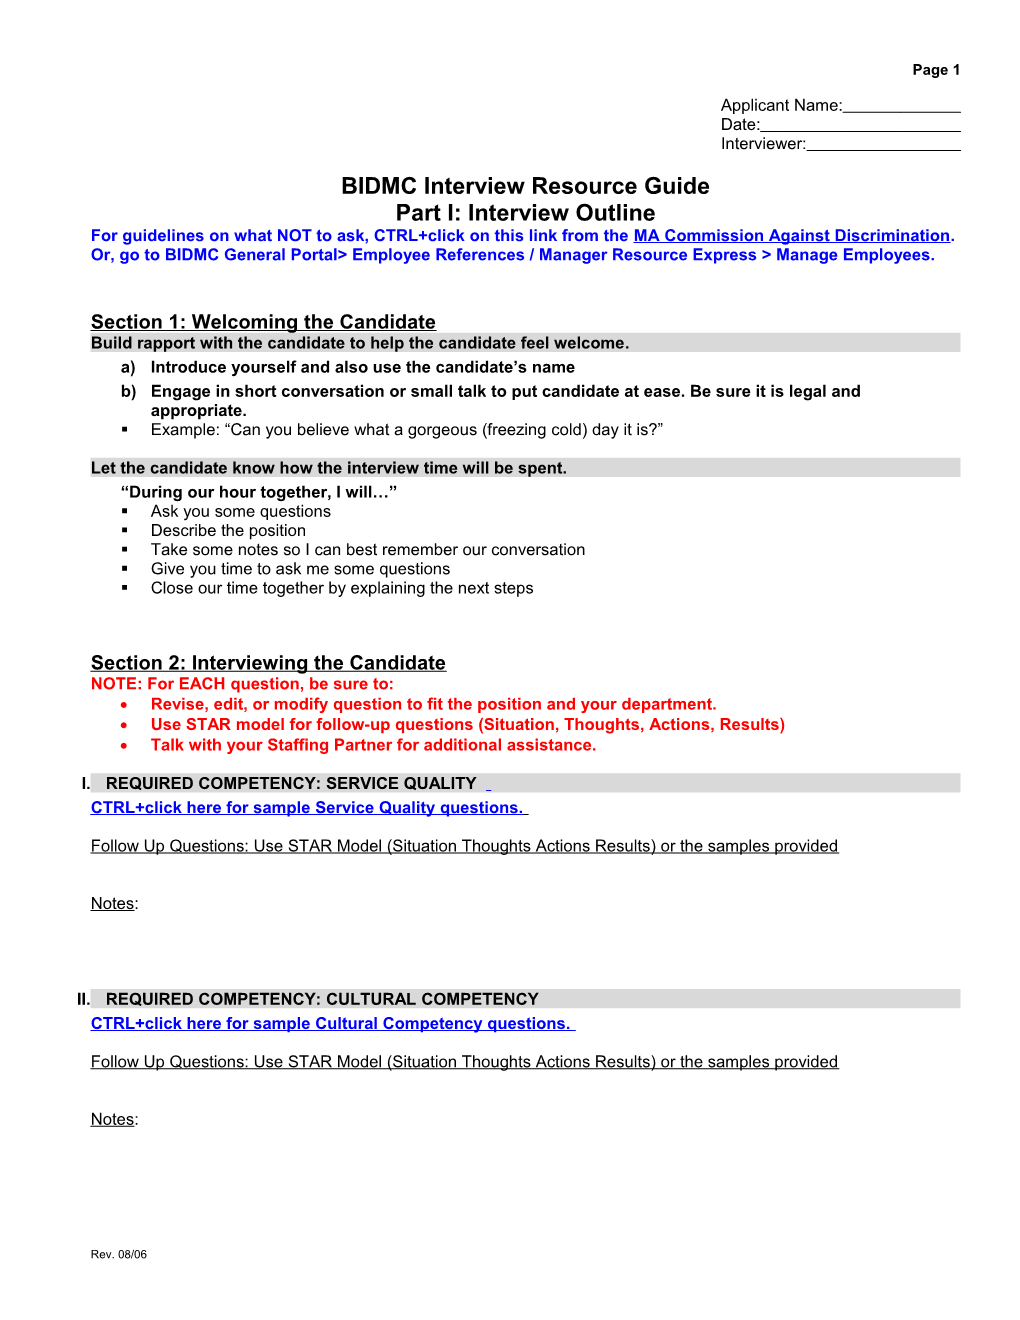 BIDMC Interview Resource Guide